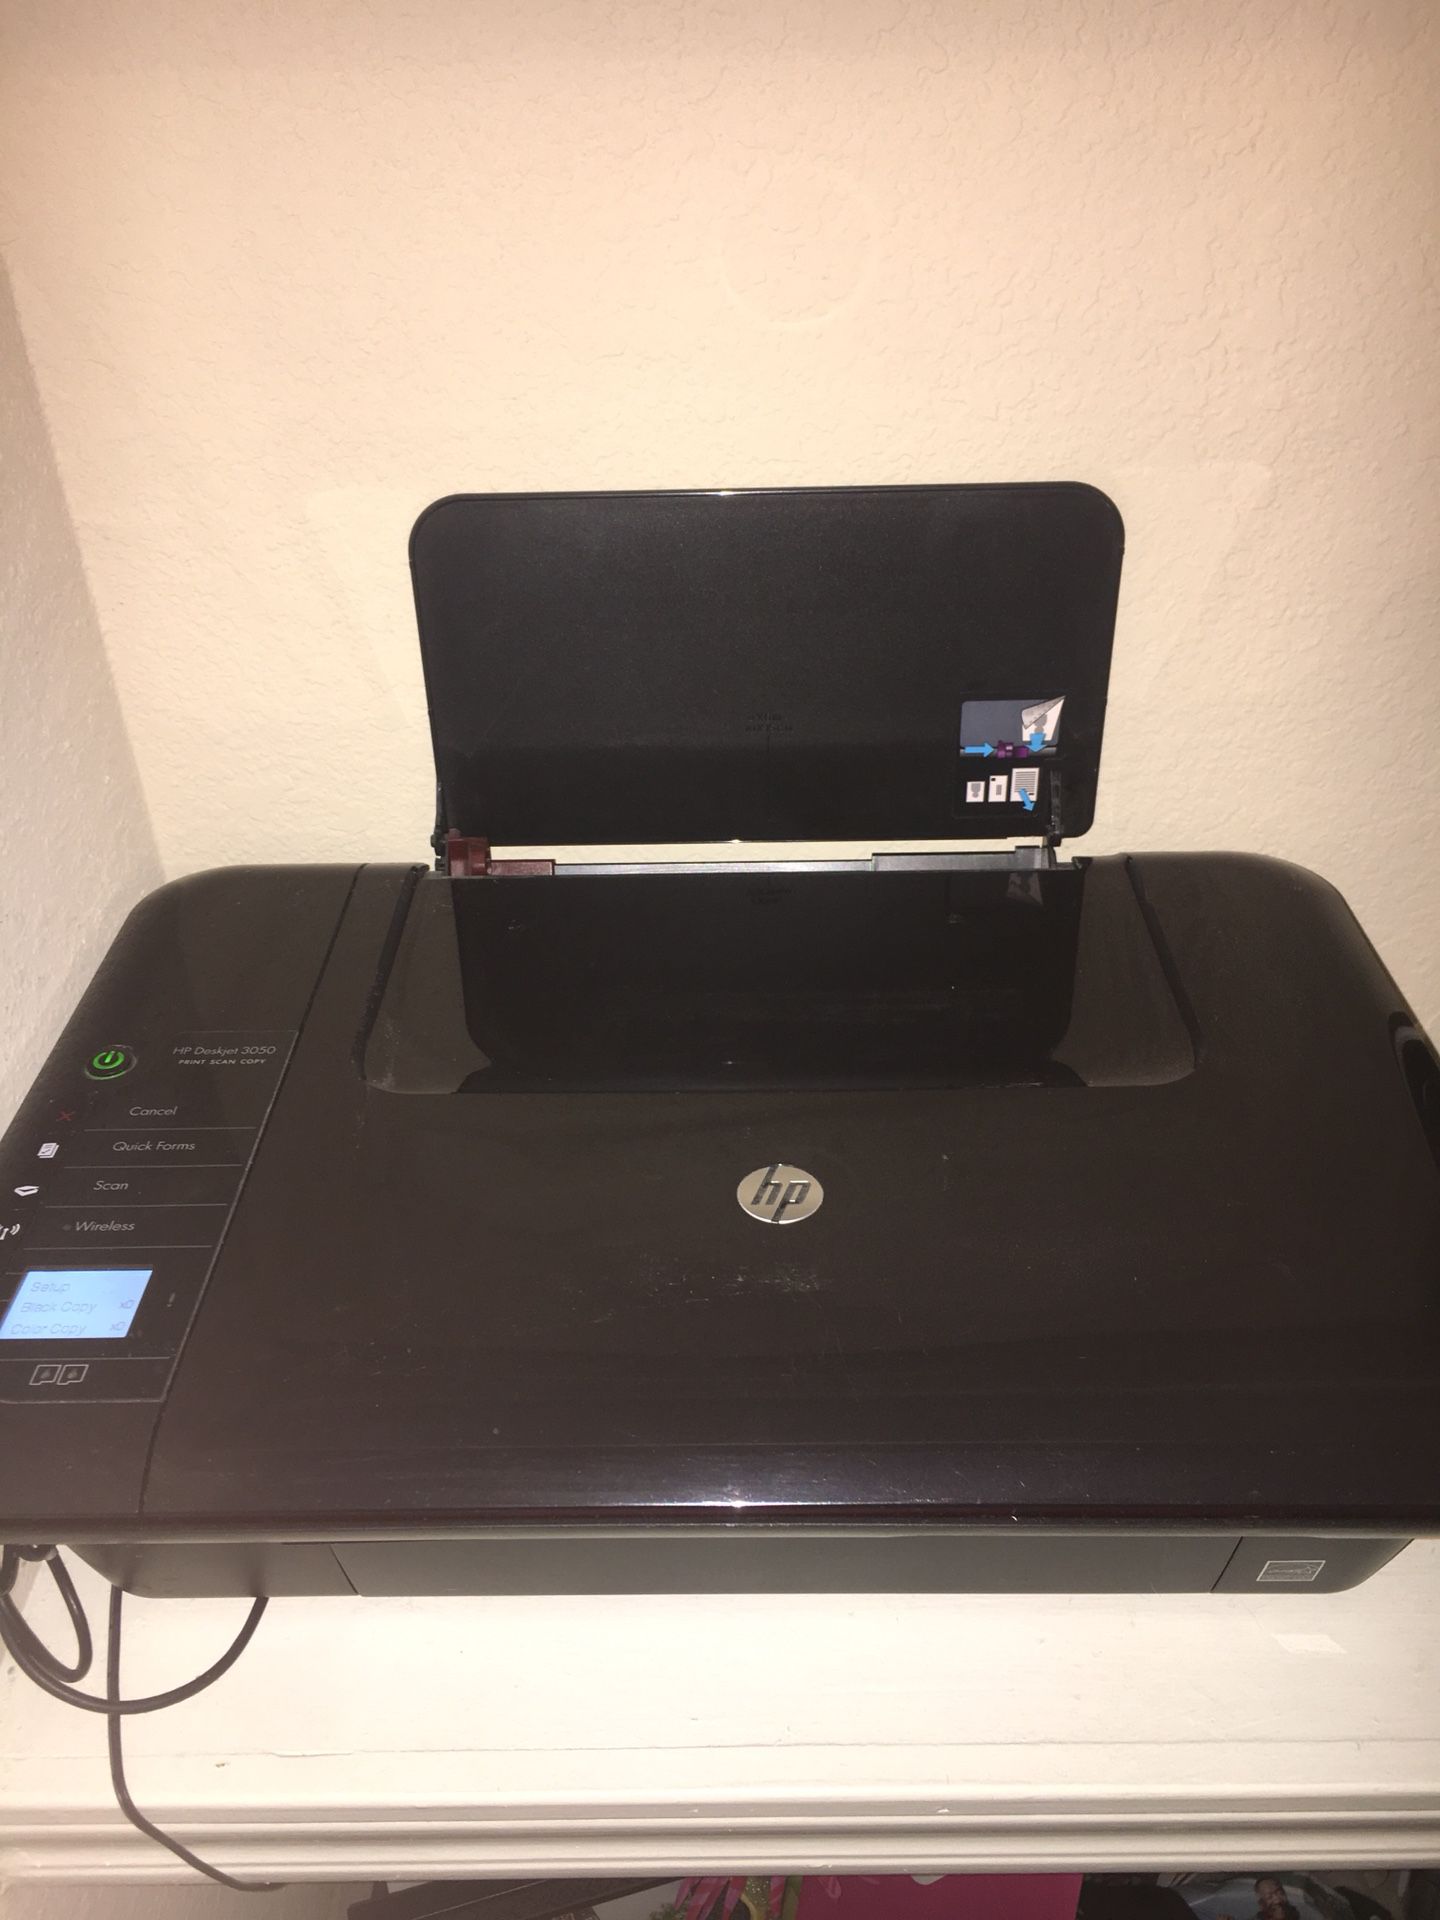 HP Deskjet 3050 Printer/Scanner Sale in Katy, - OfferUp